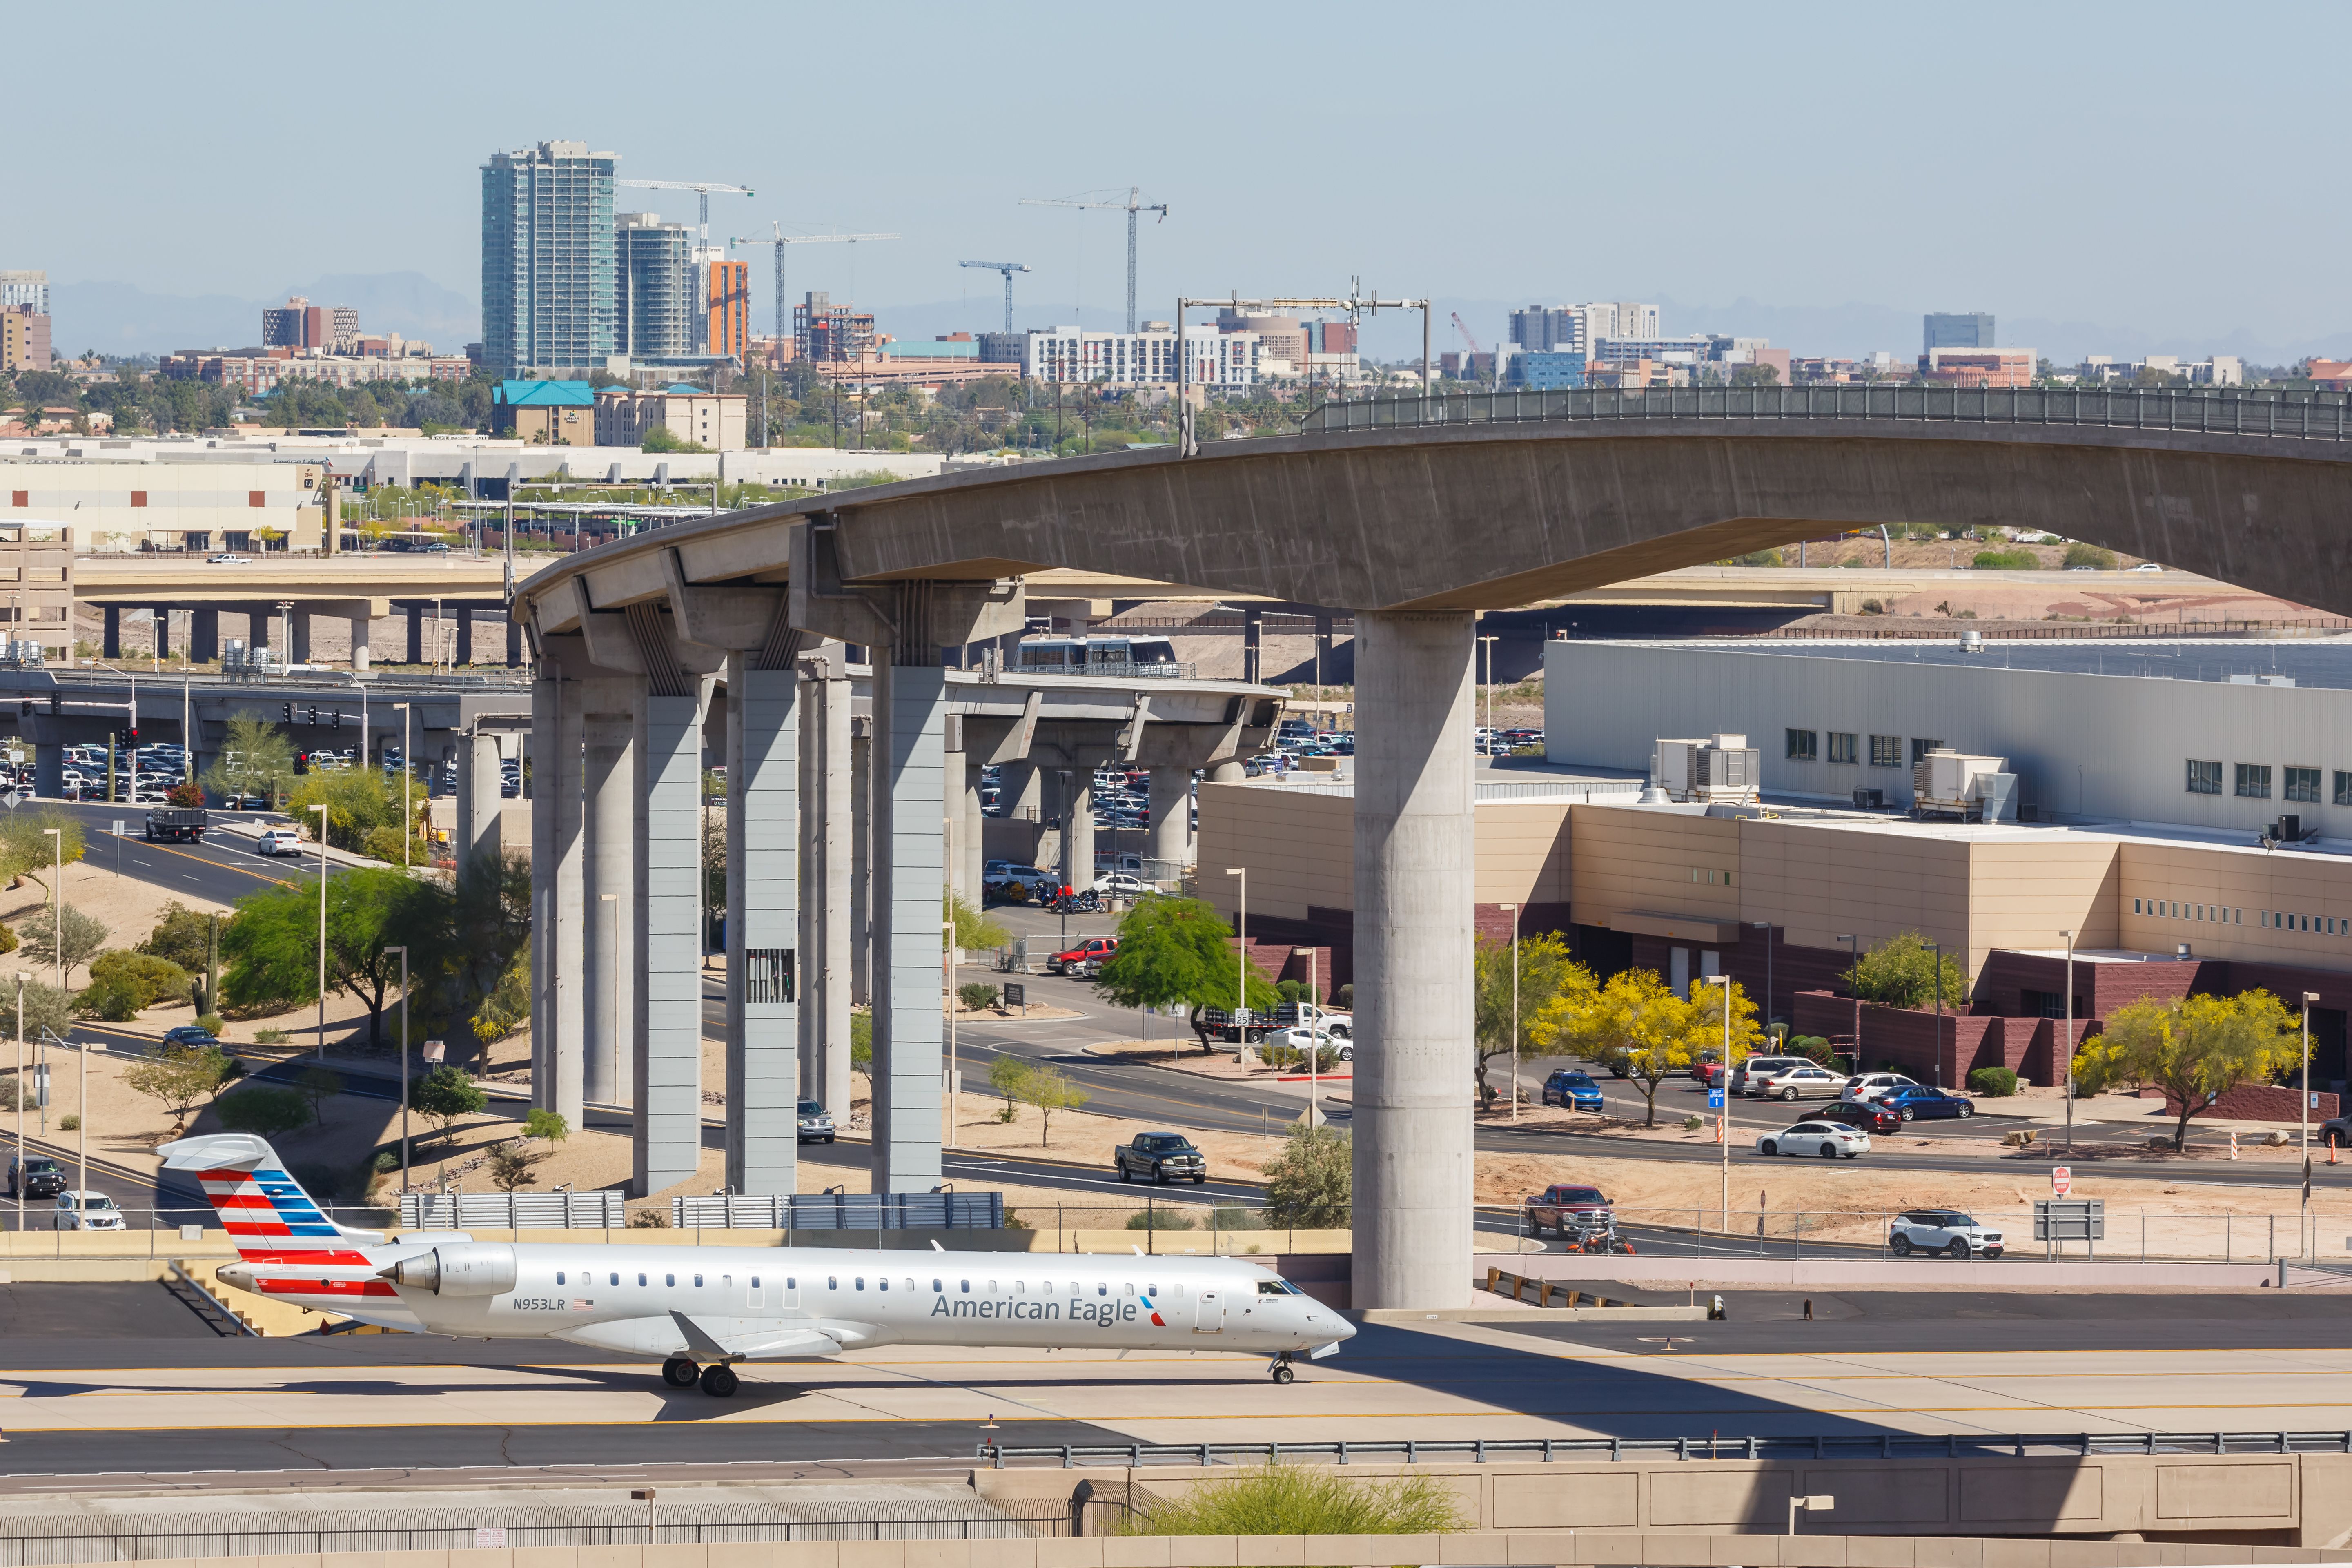 American Eagle (Mesa Airlines) Bombardier CRJ-900 (N953LR) taxiing at Phoenix Sky Harbor International Airport under the PHX Sky Train bridge.